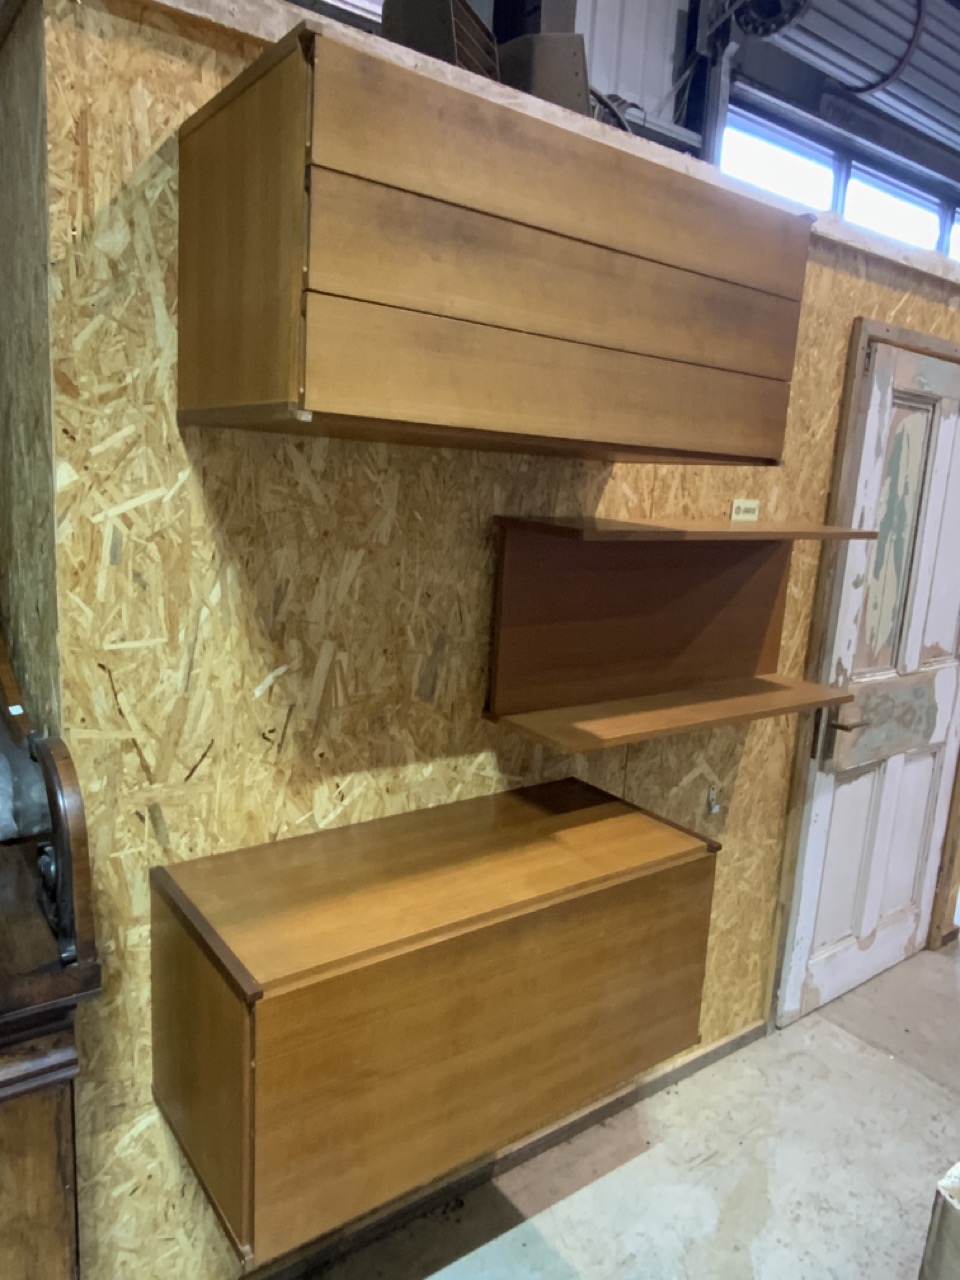 Tapley Beaver Self Leveling mid century Furniture. Bureau, set of three drawers and a bookshelf.